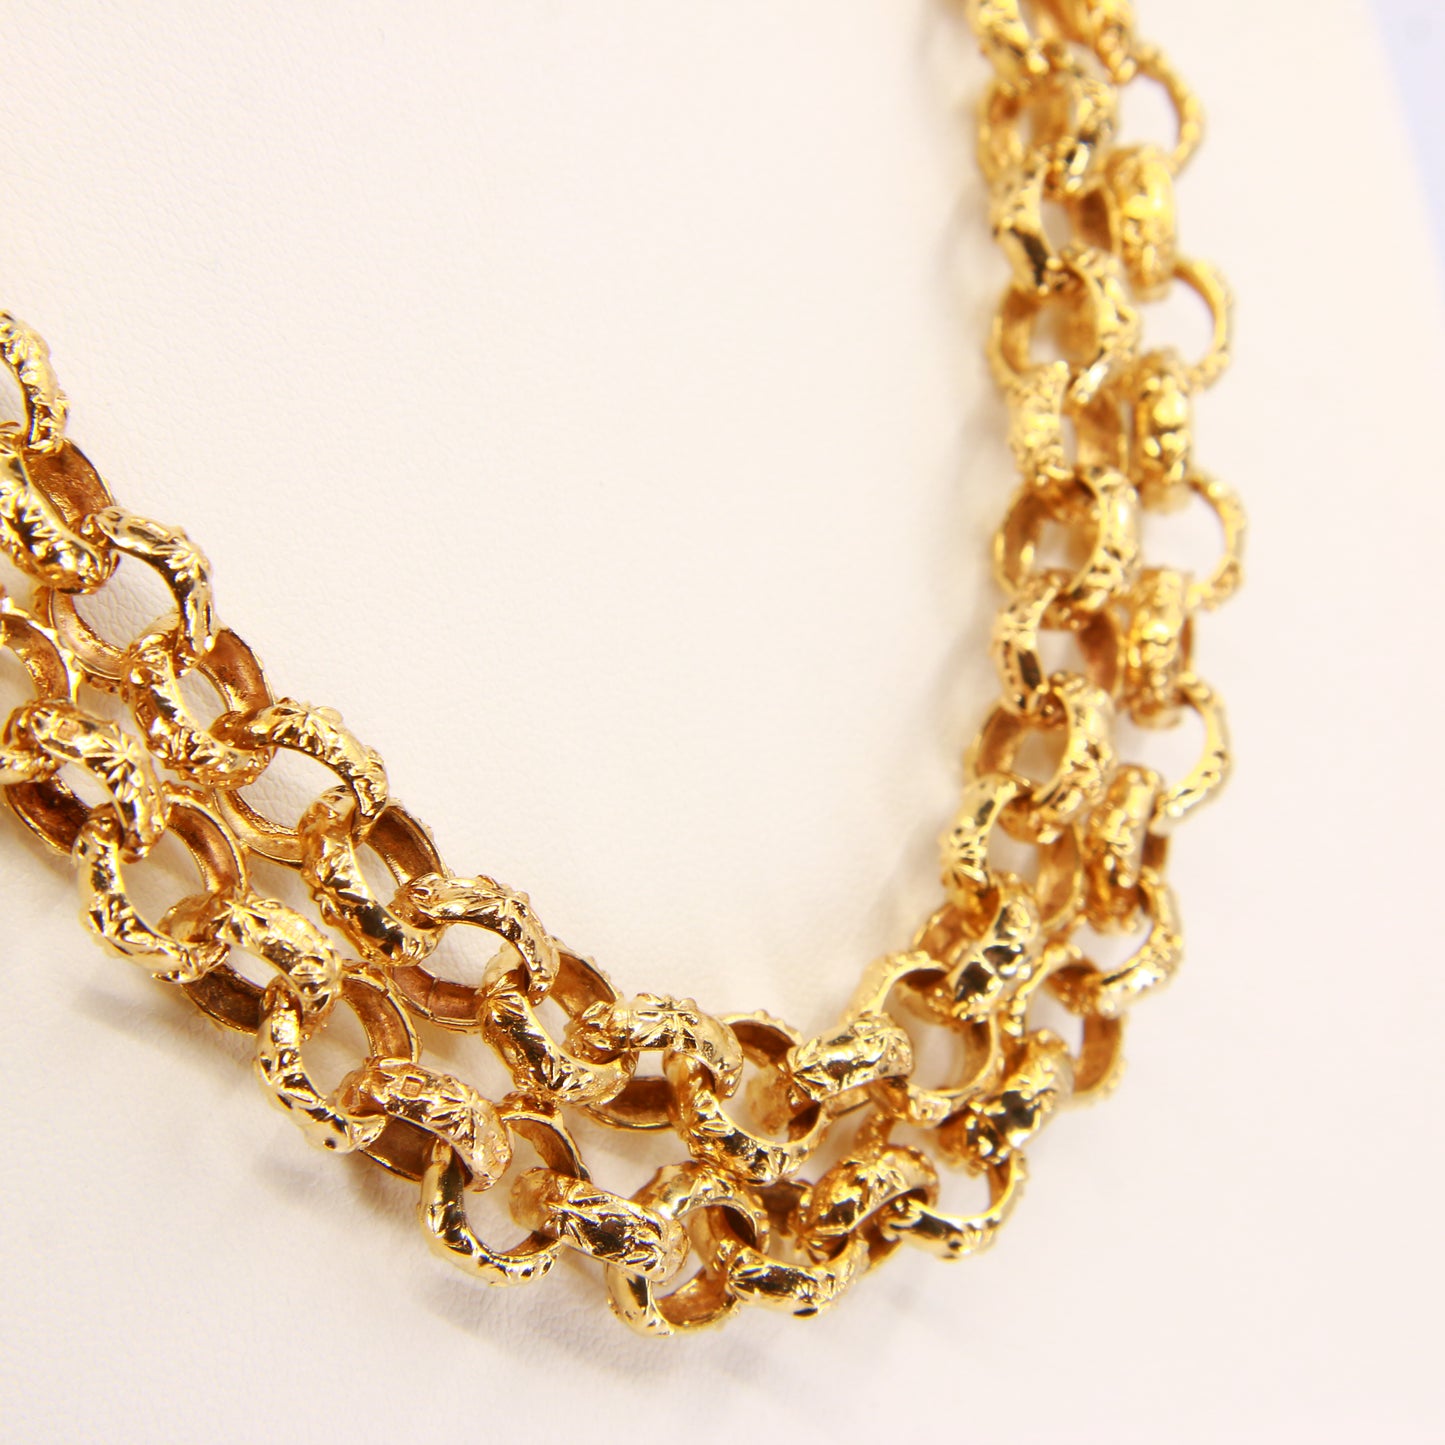 Large Vintage 9ct Belcher Chain Necklace 9 Carat Hallmarked 1975 Yellow Gold